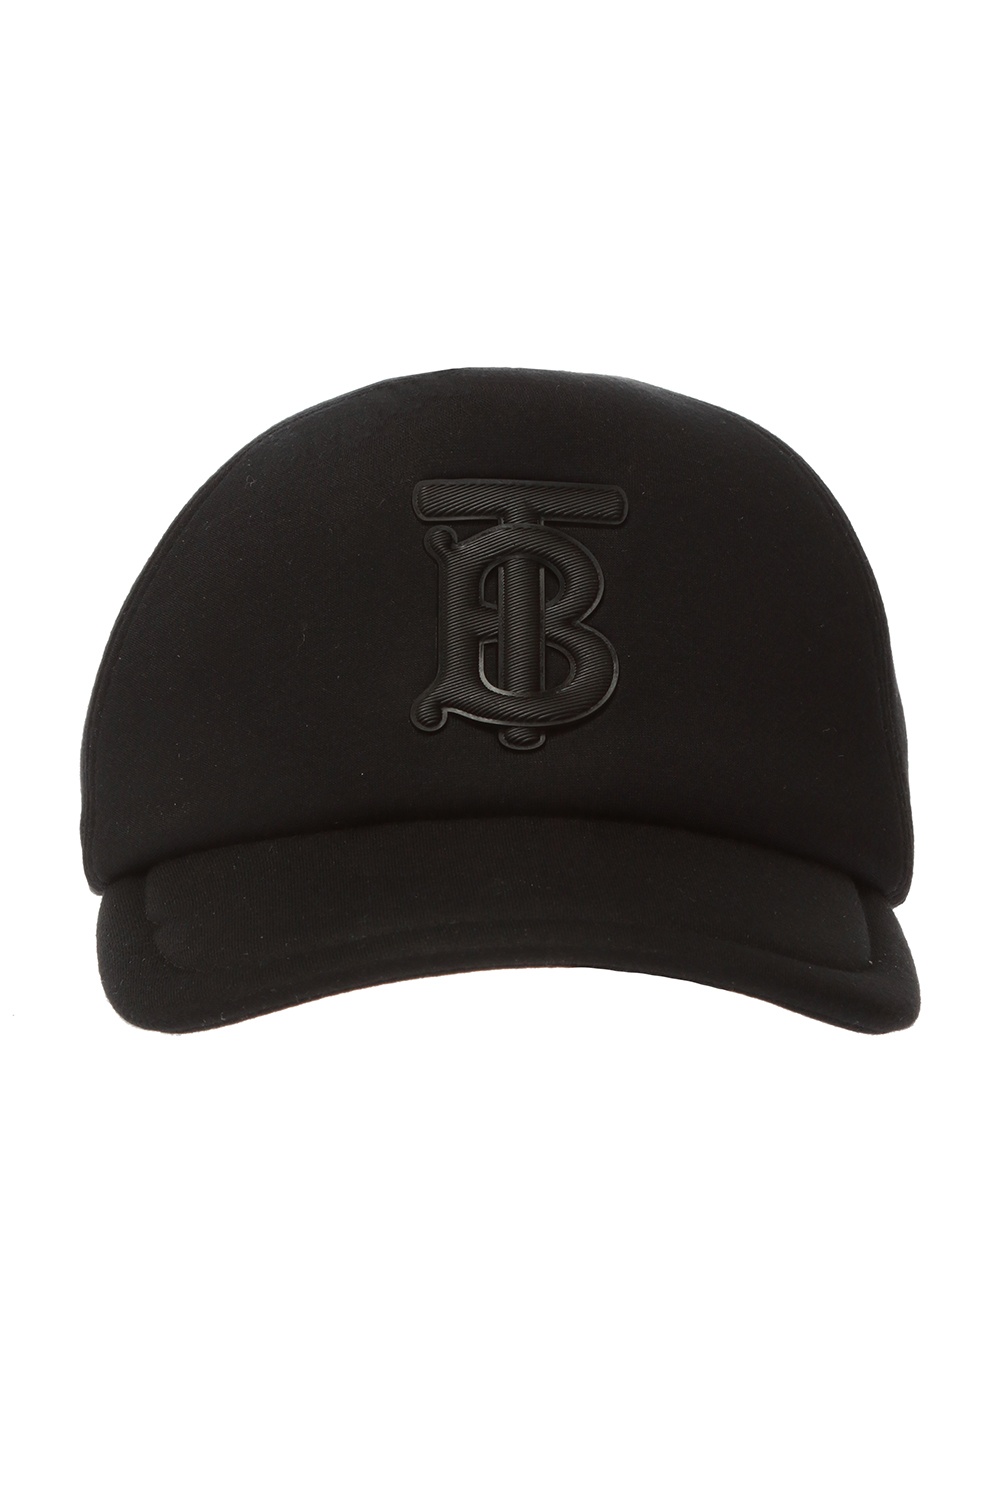 Burberry Baseball cap with logo | Men's Accessorie | Vitkac